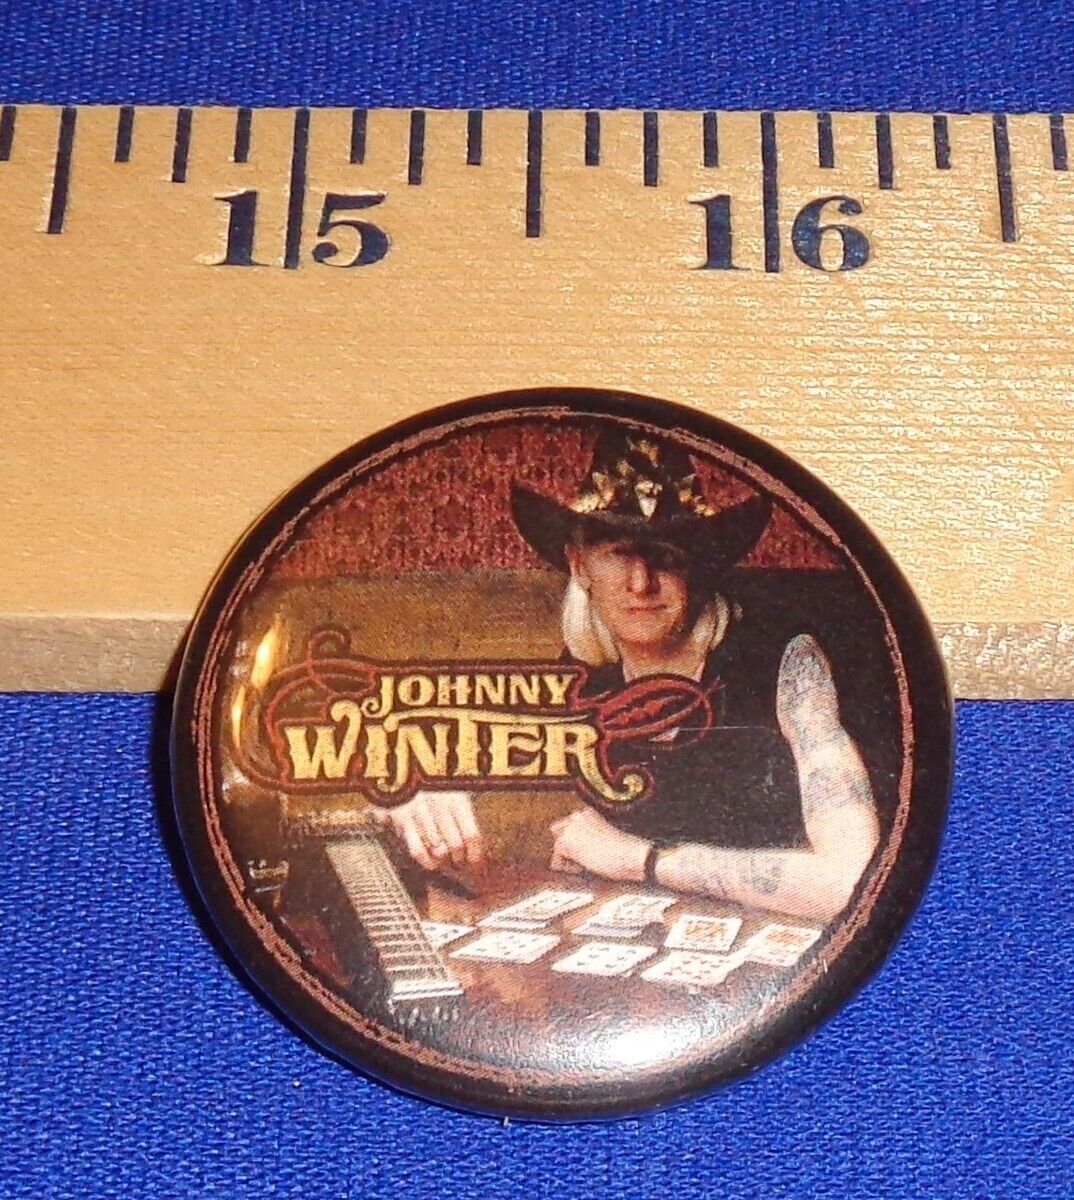 1 Johnny Winter pin